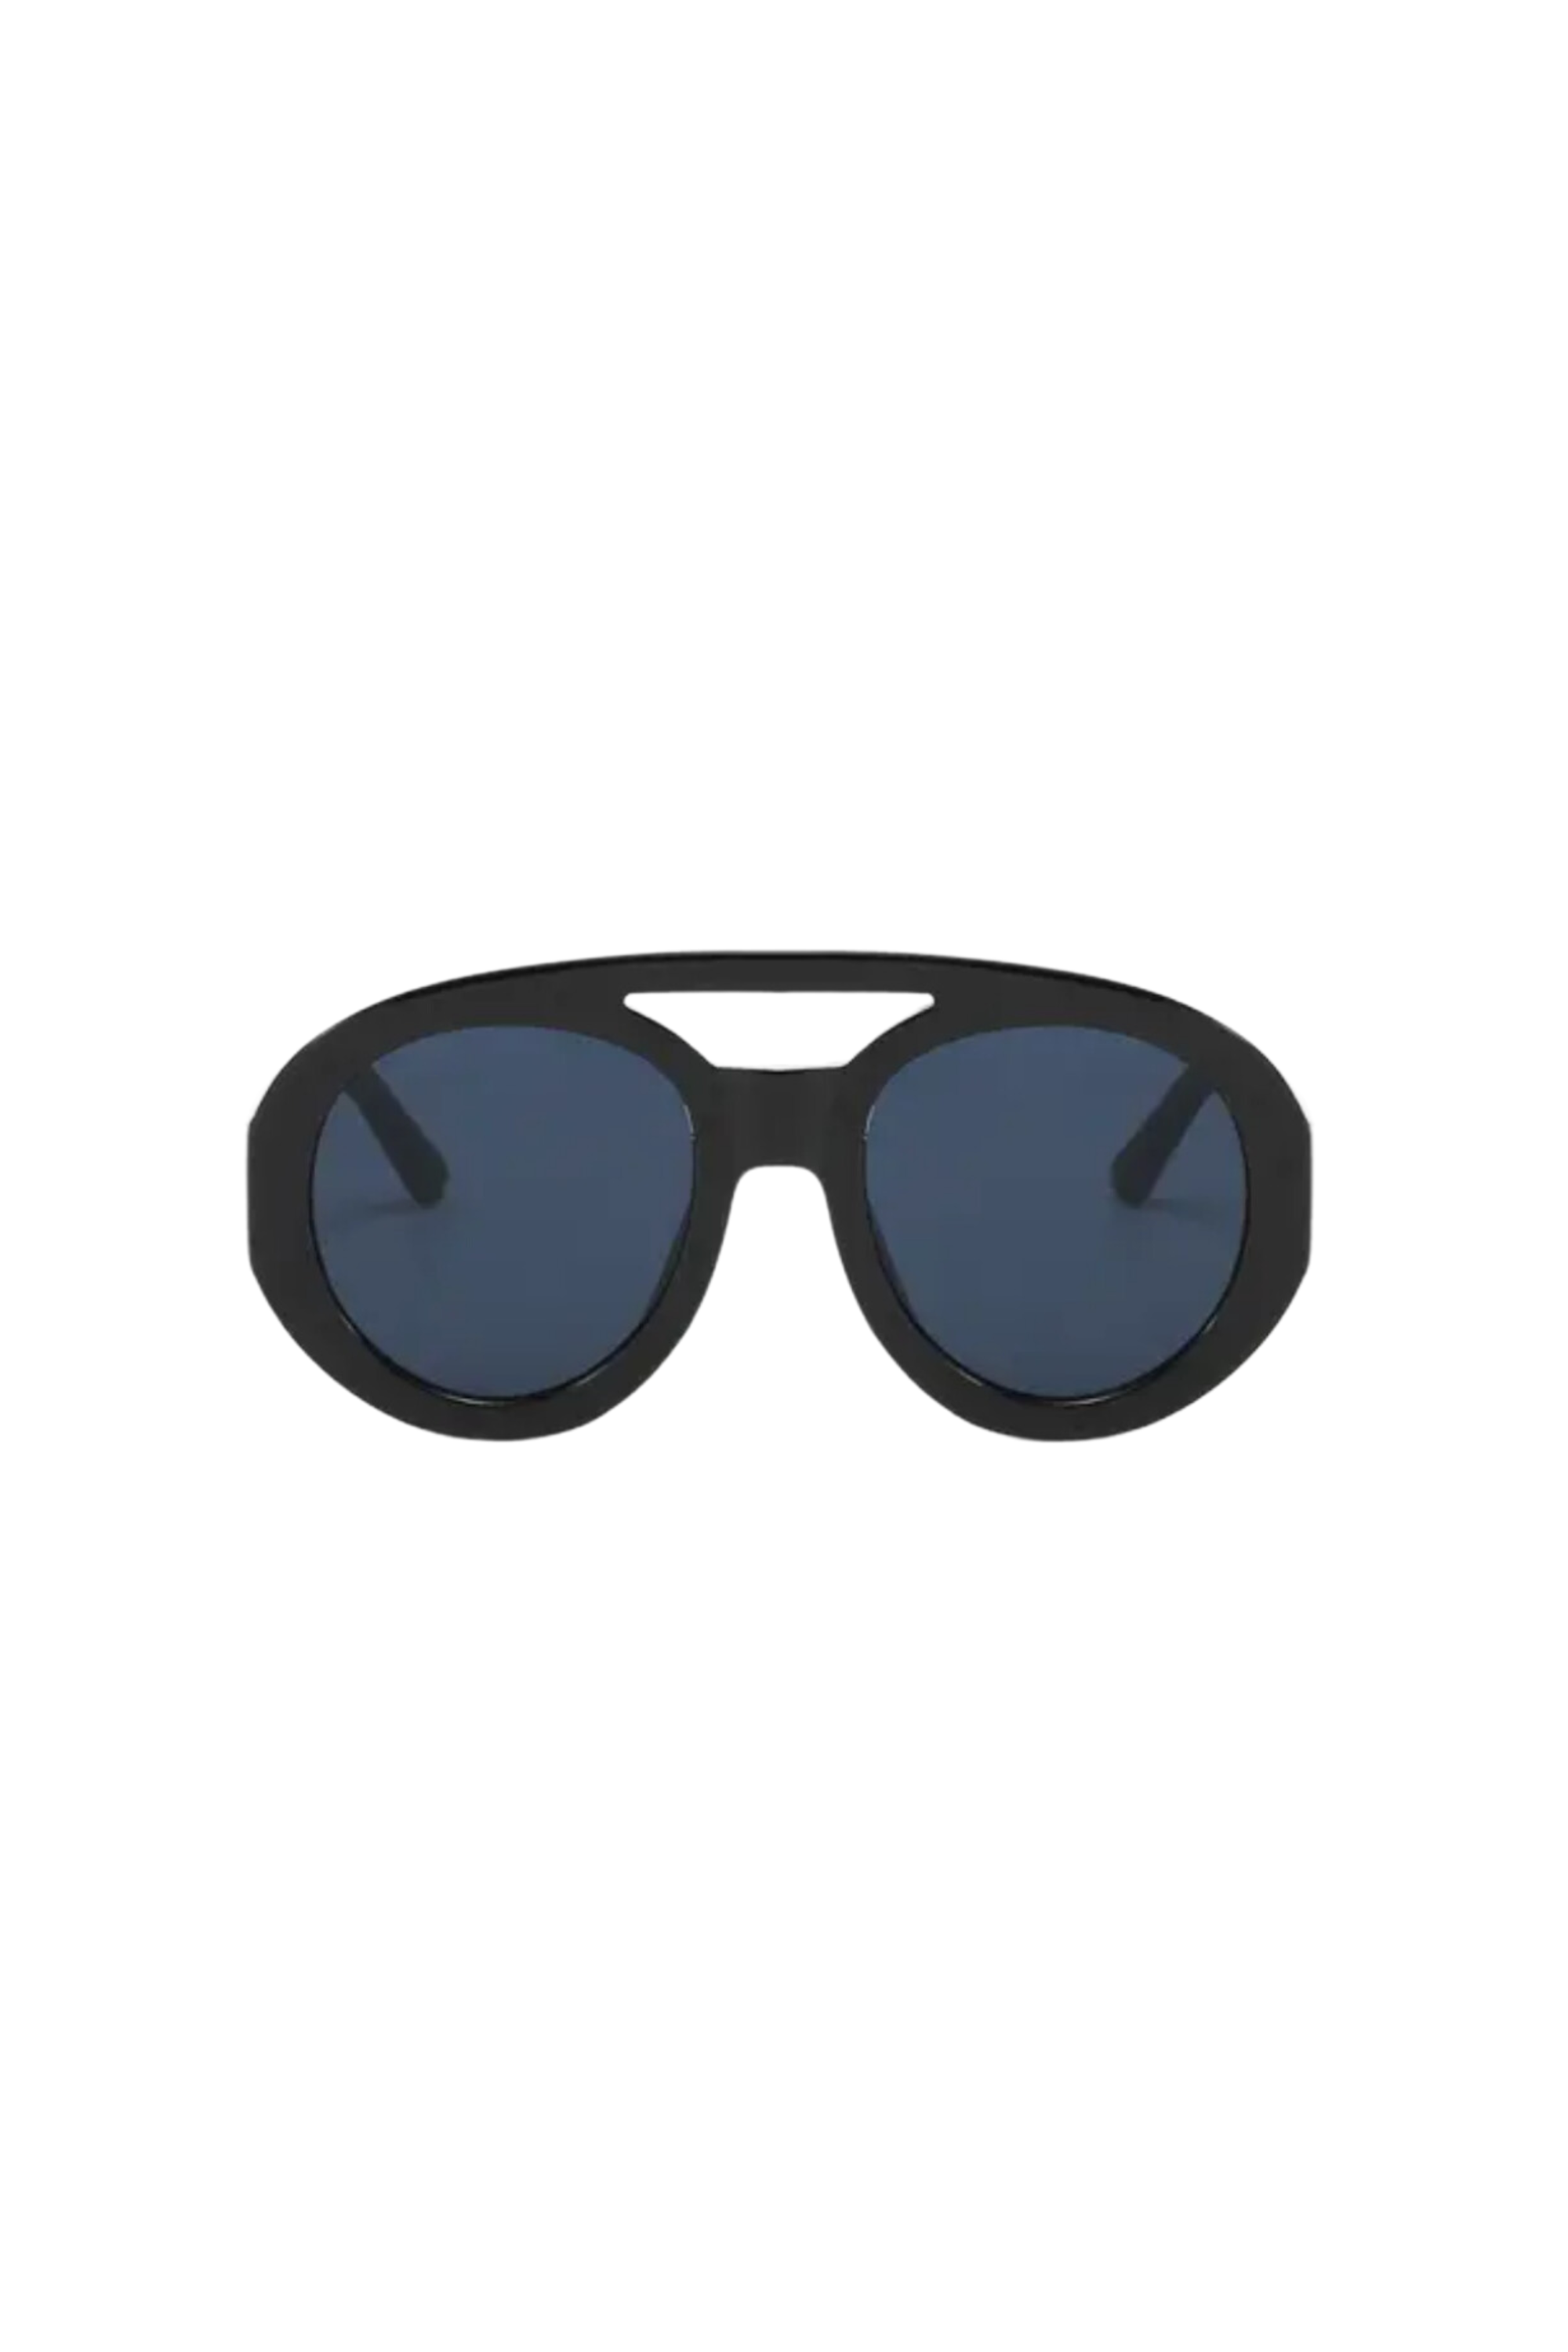 GOLDxTEAL stylish oversized aviator style sunglasses.